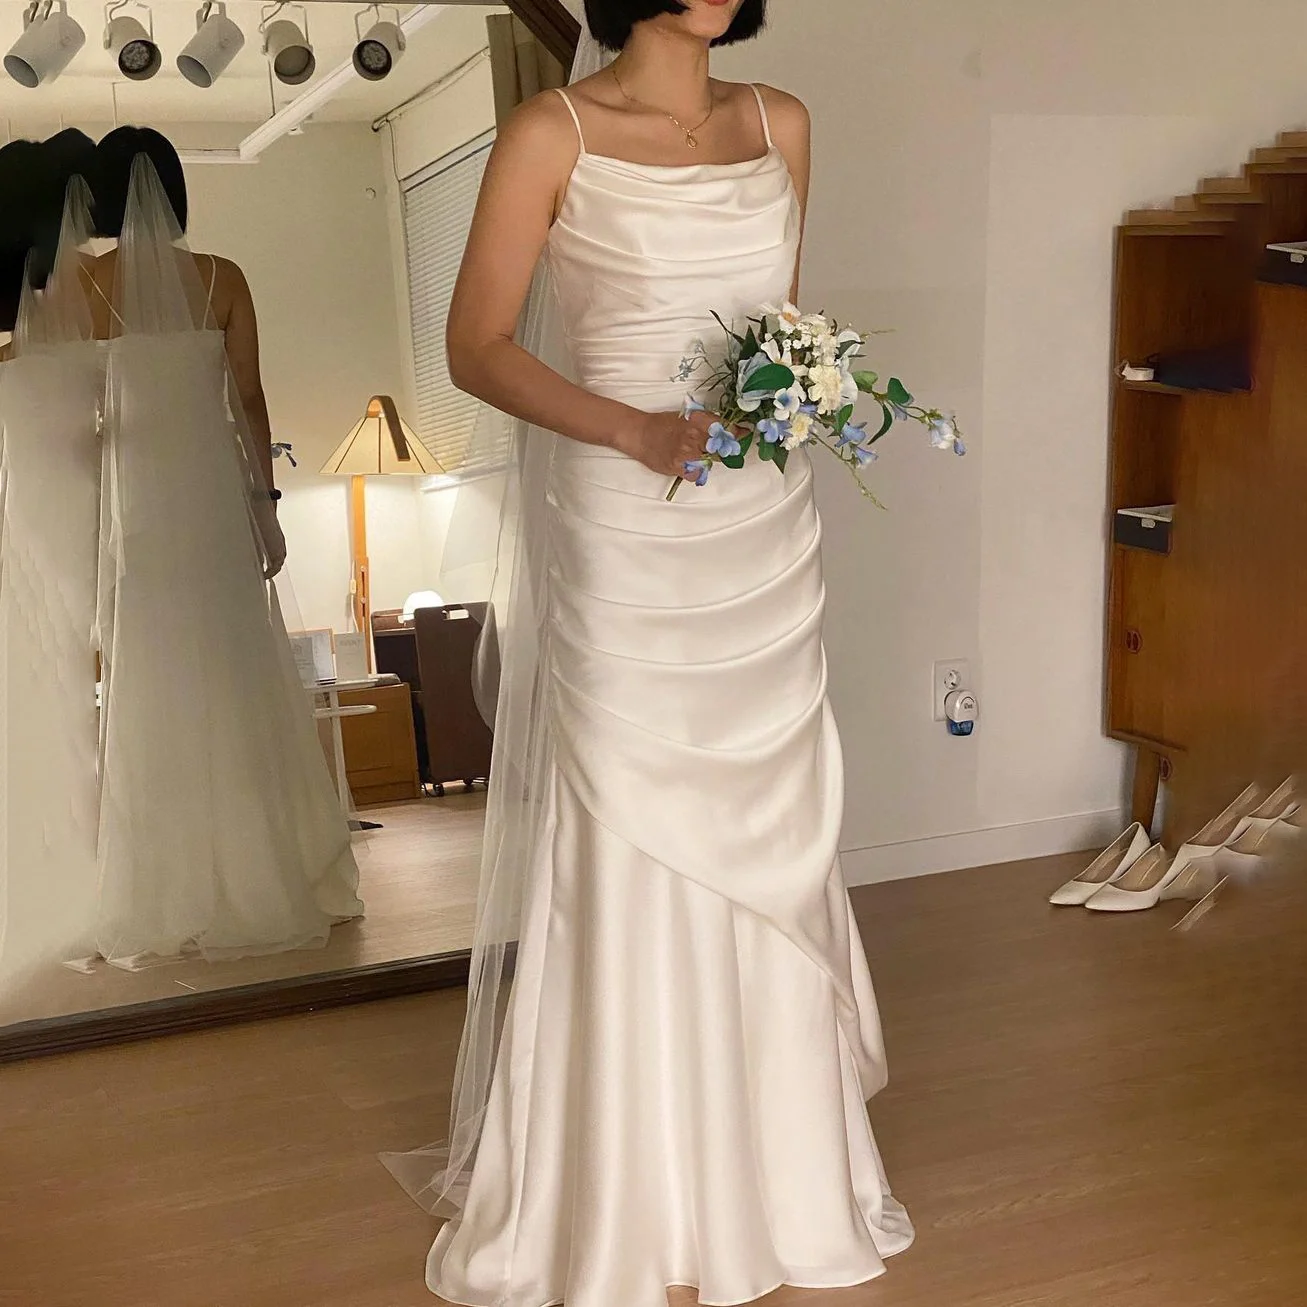 

OEING Strapless Luxury Formal Wedding Dresses Simple Ivory Pleat Sleeveless 프롬드레스 Floor Length Elegant Bride Gowns Party Women